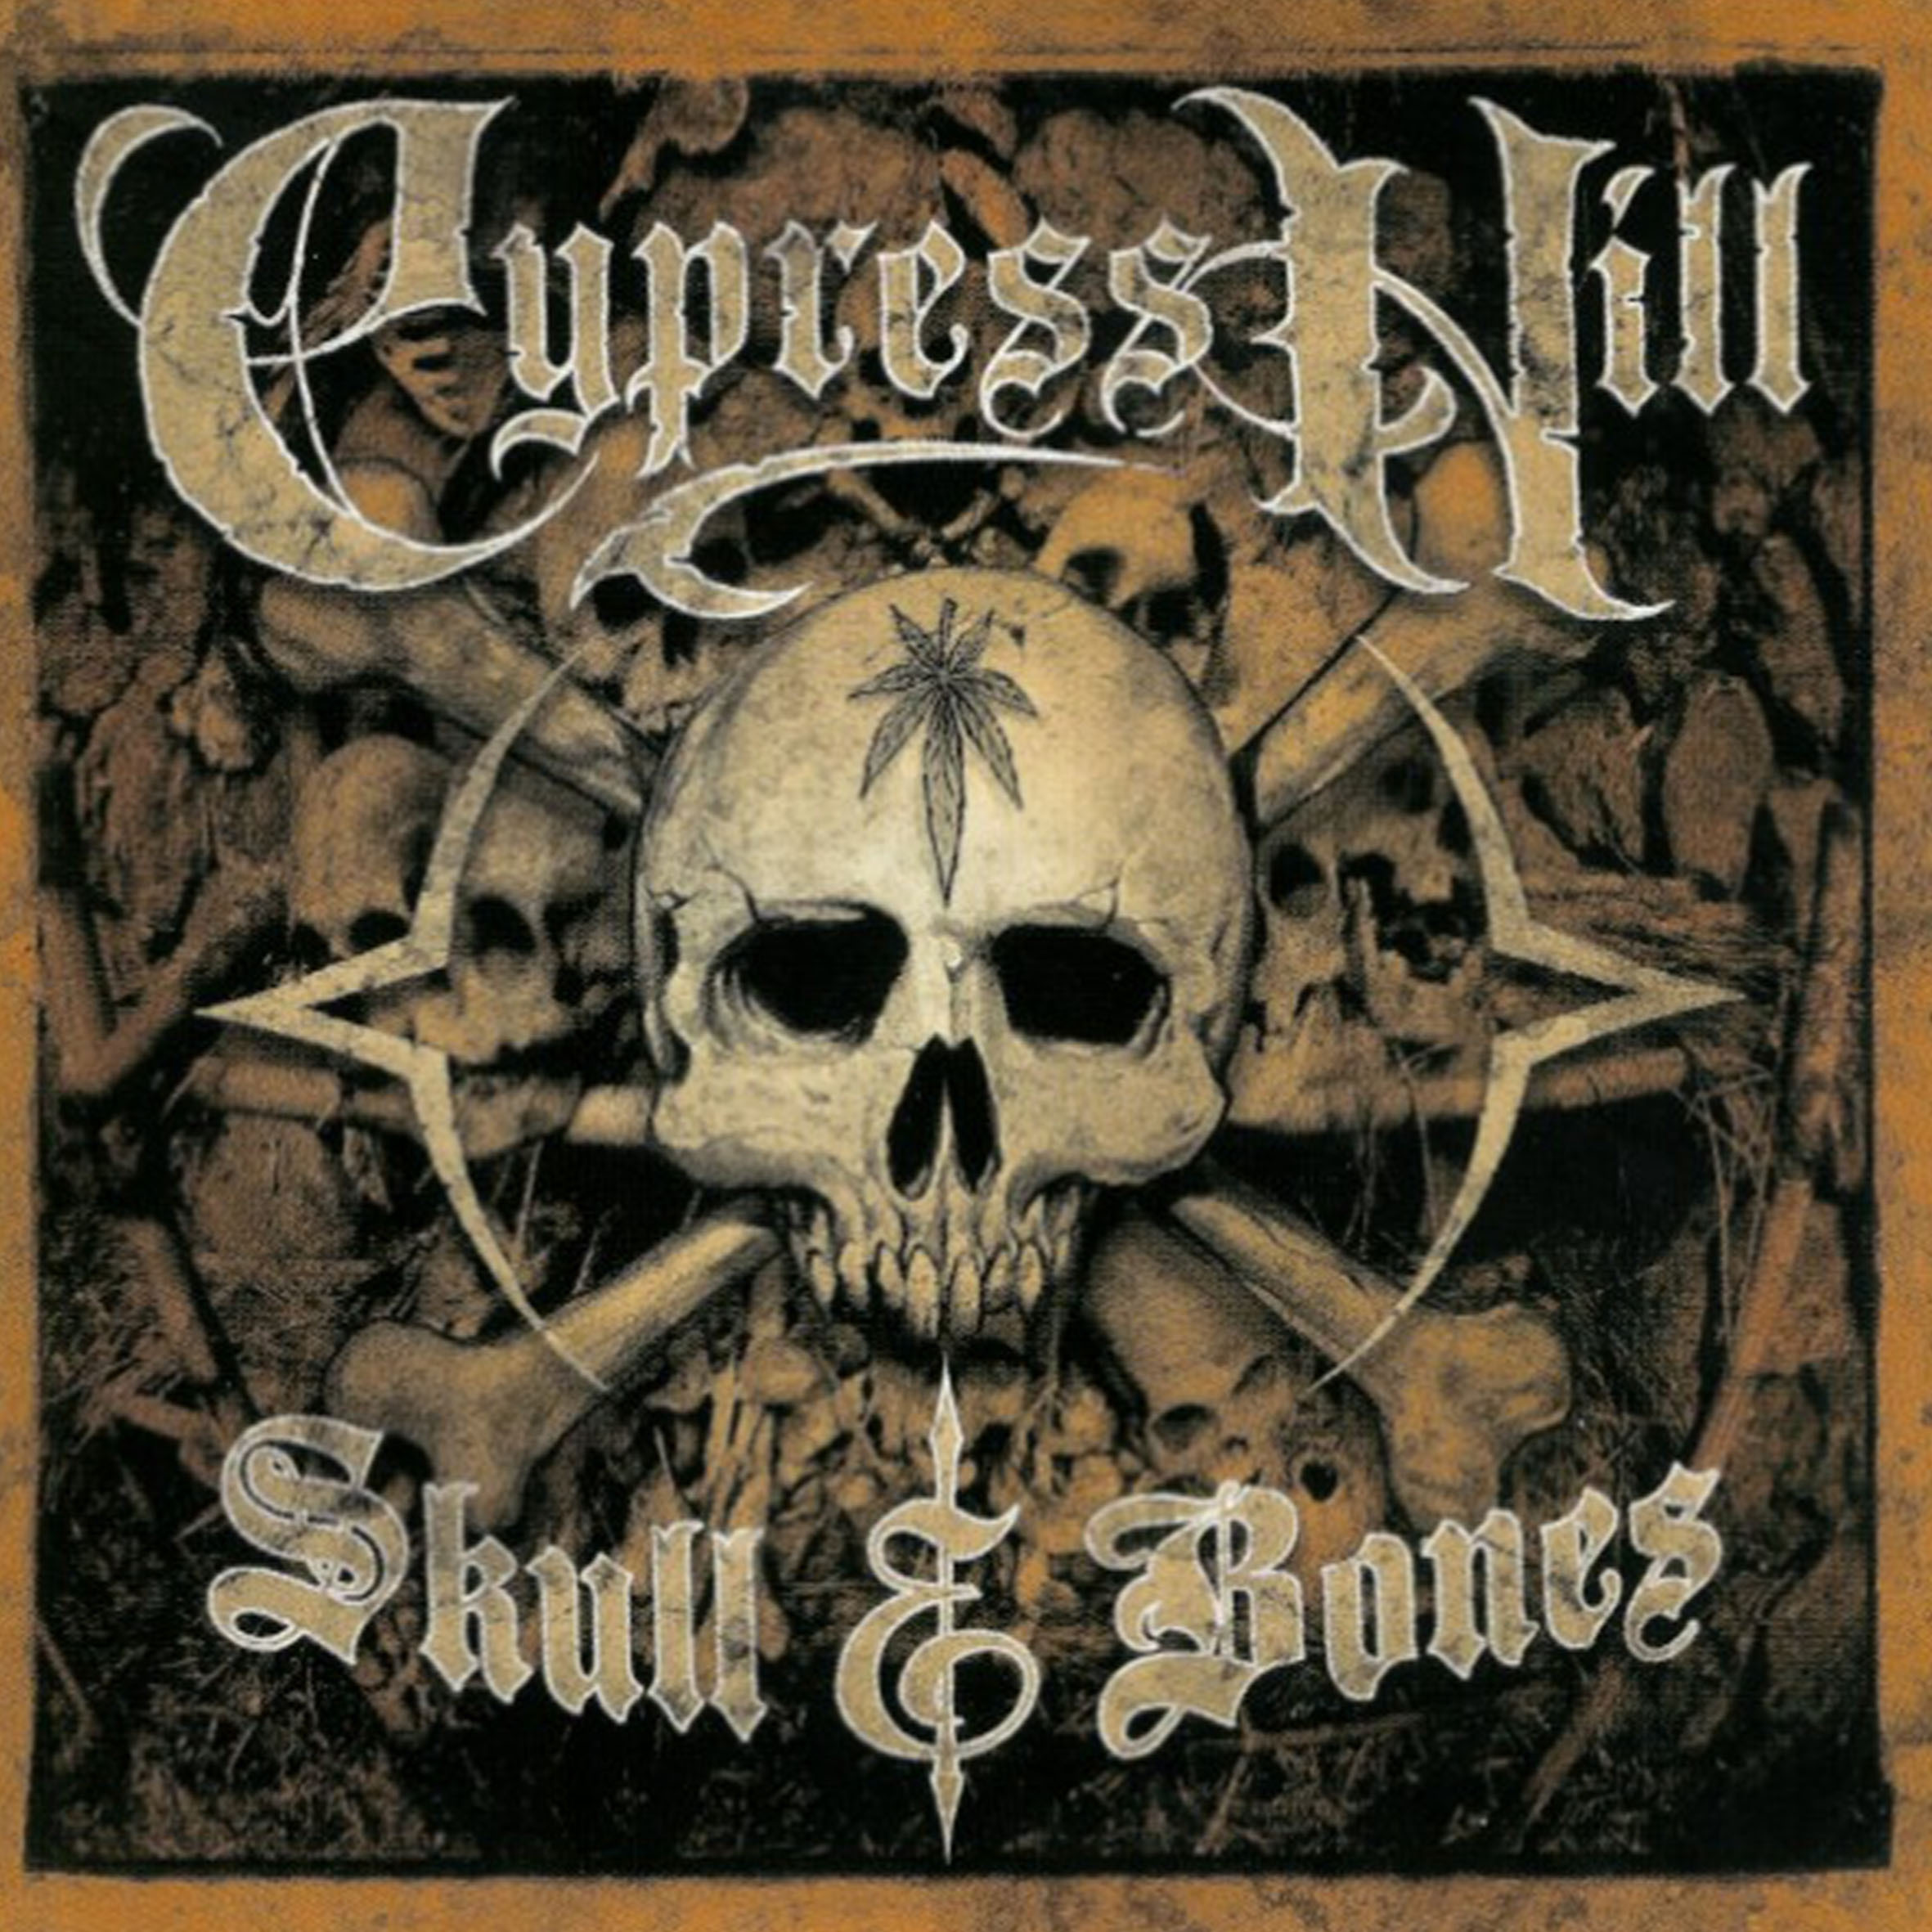 CD - Cypress Hill - Skull and Bones